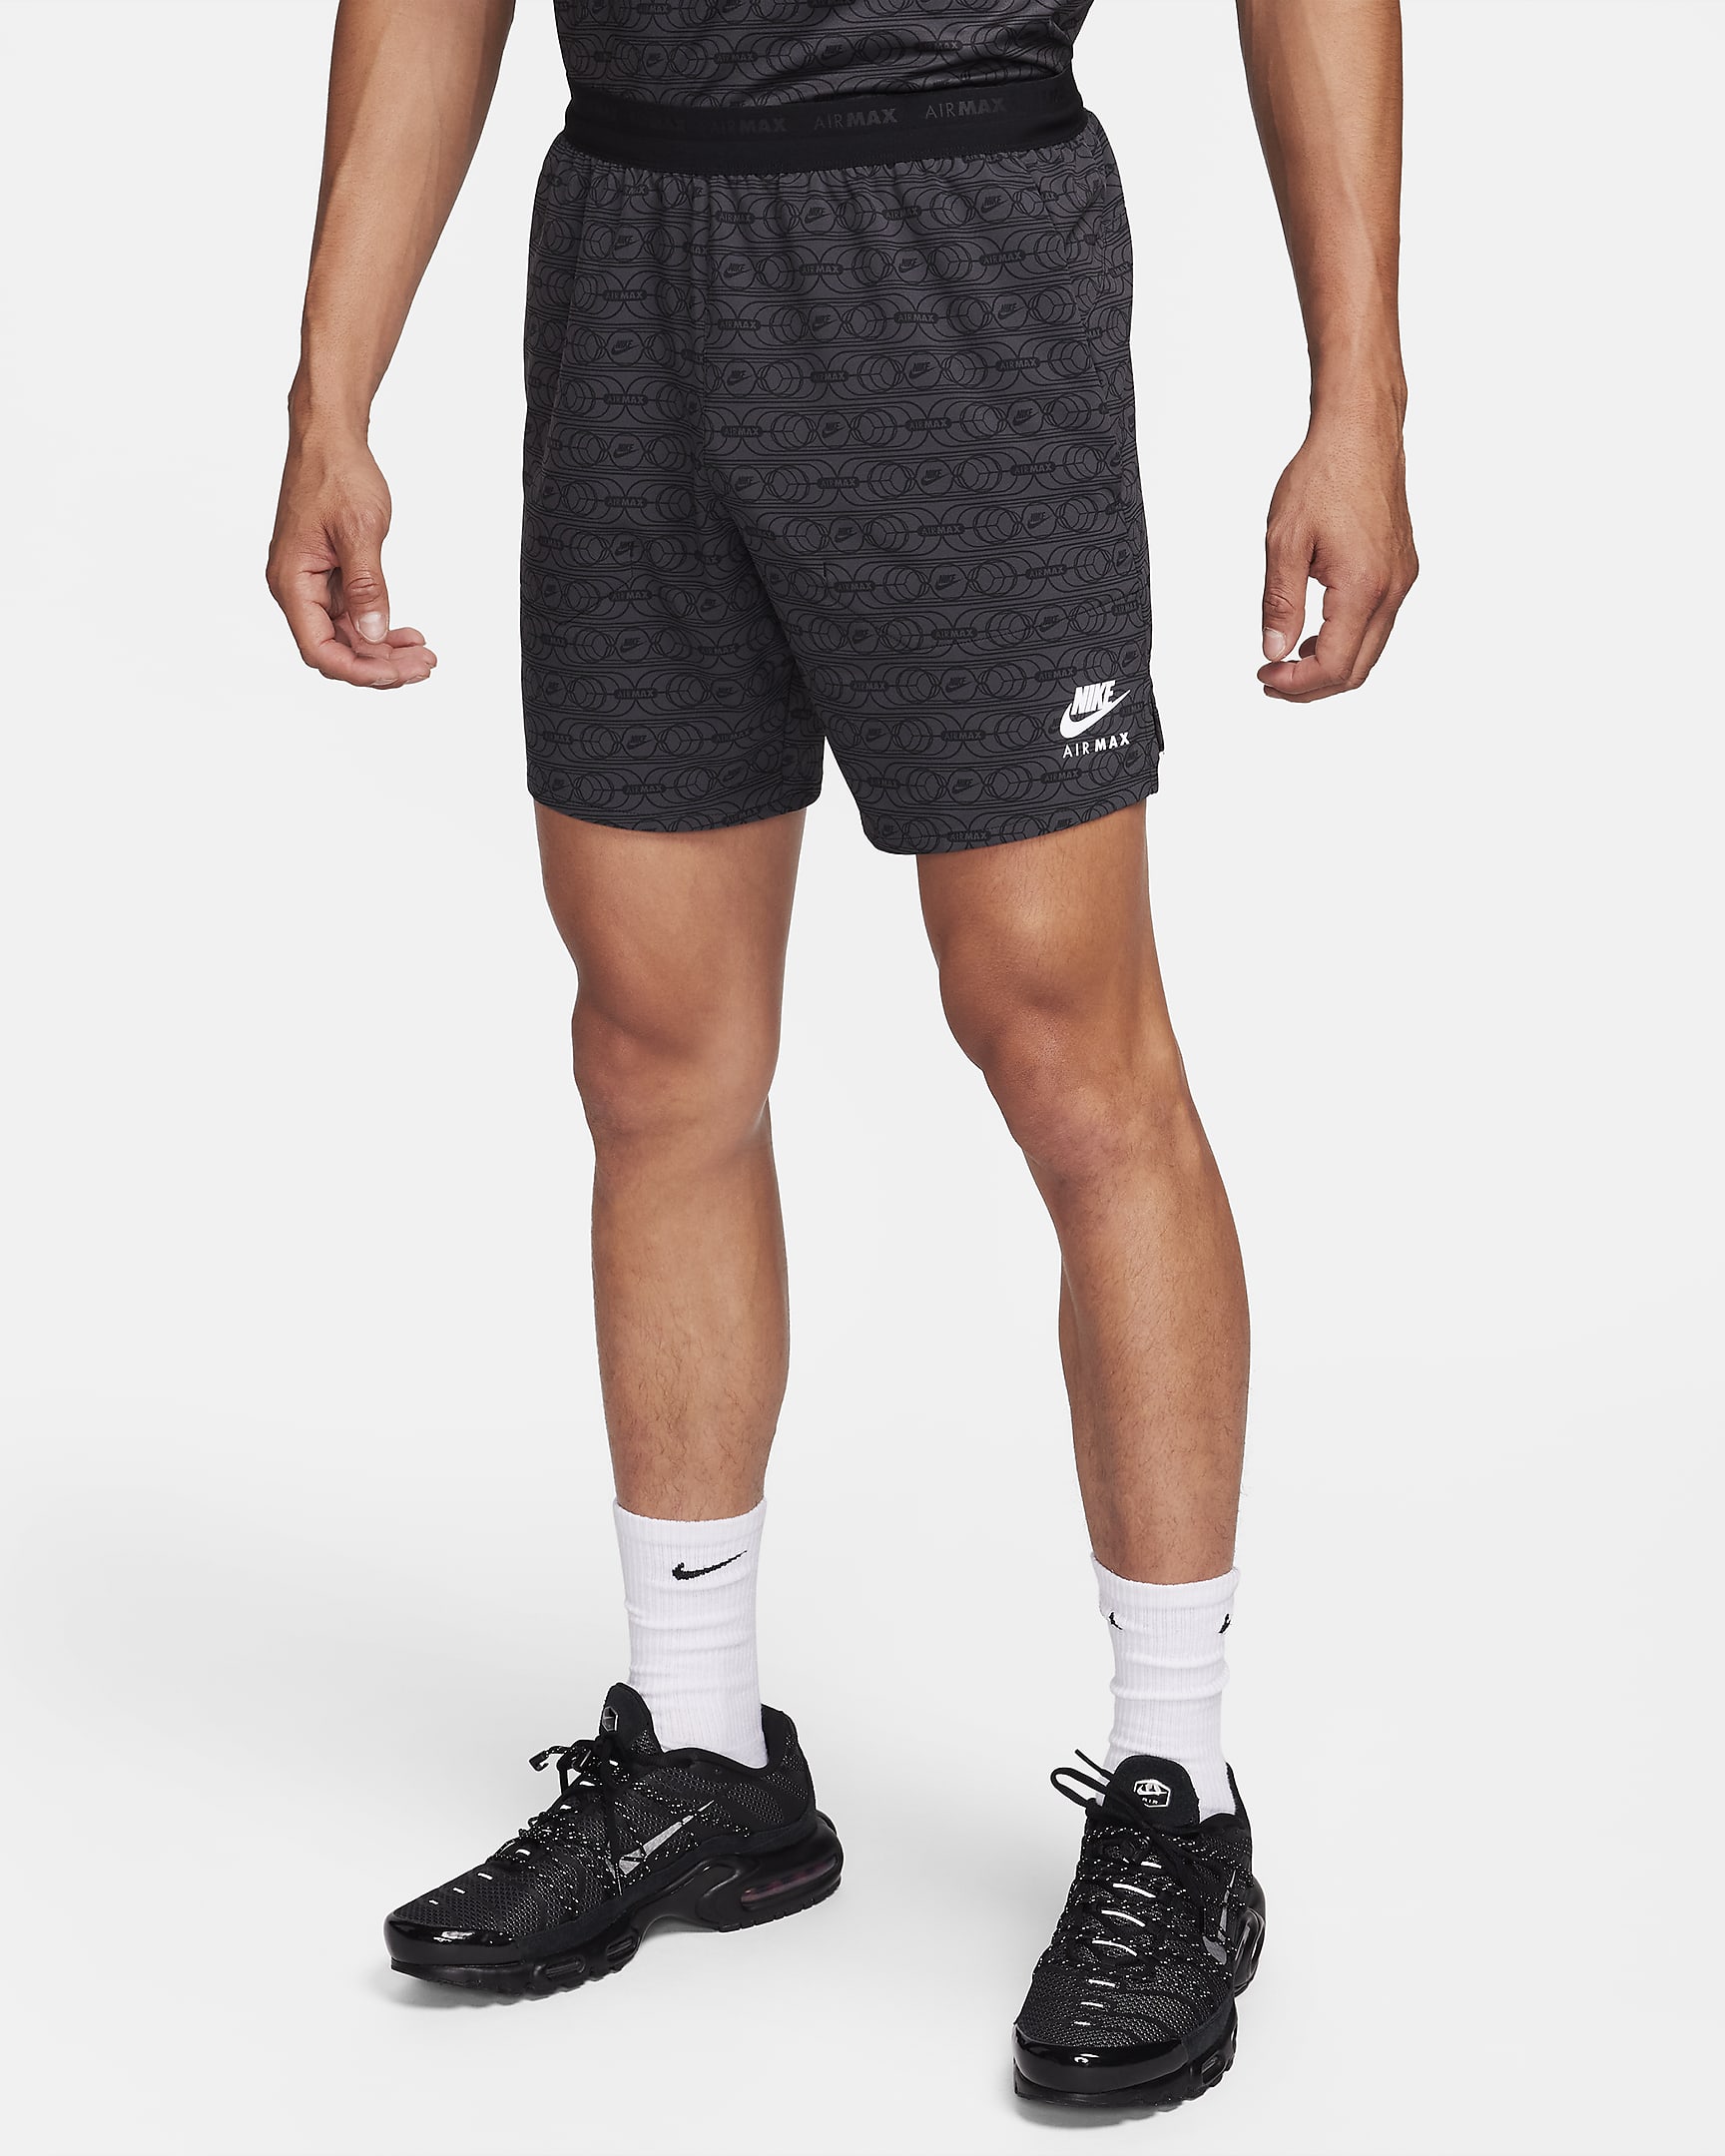 Nike Air Max Men's Woven Shorts. Nike ZA